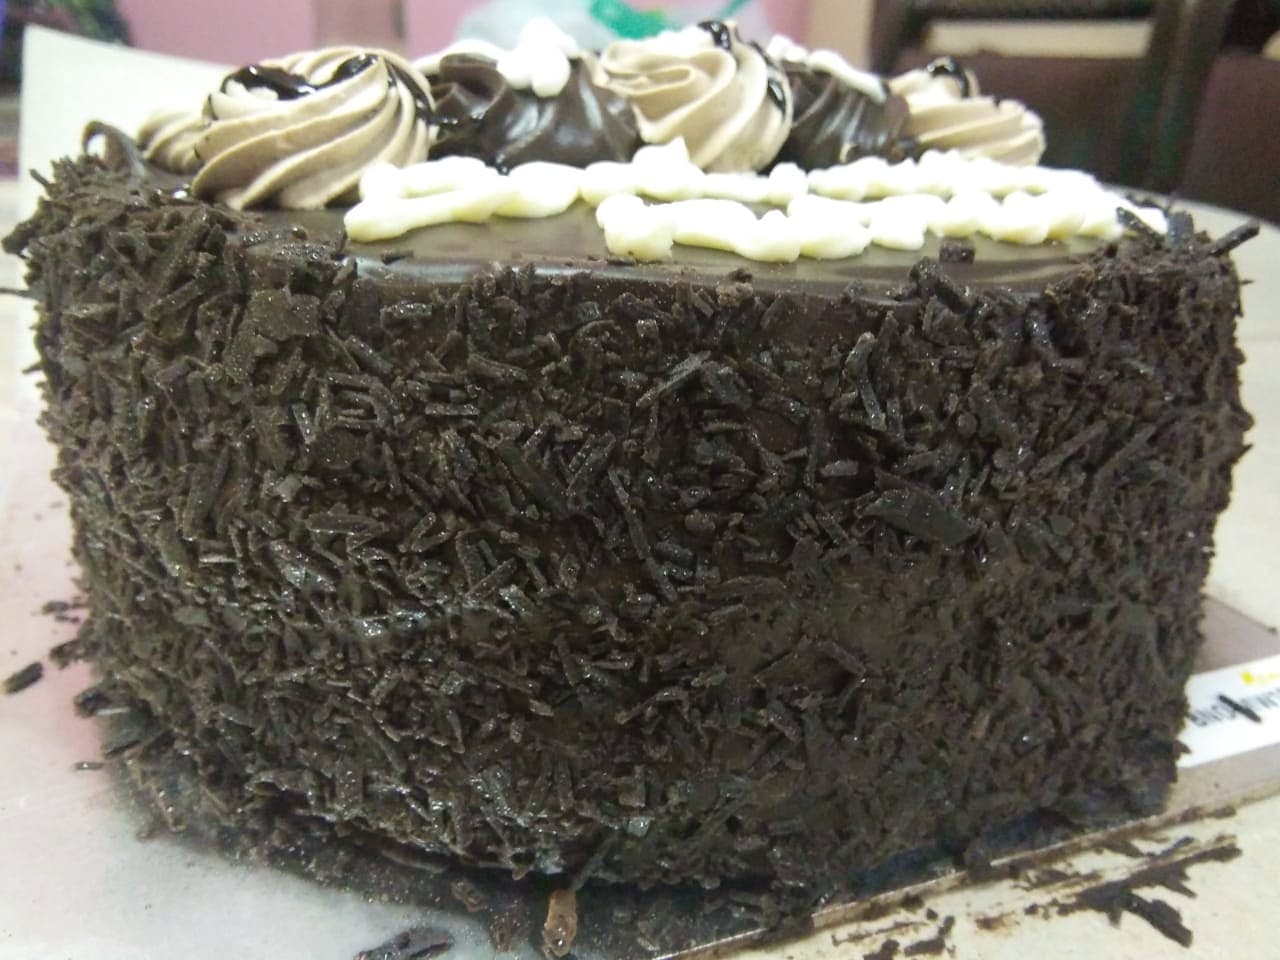 Cake,Buttercream,Chocolate cake,Icing,Dessert,Food,Black forest cake,Torte,Baked goods,Cuisine